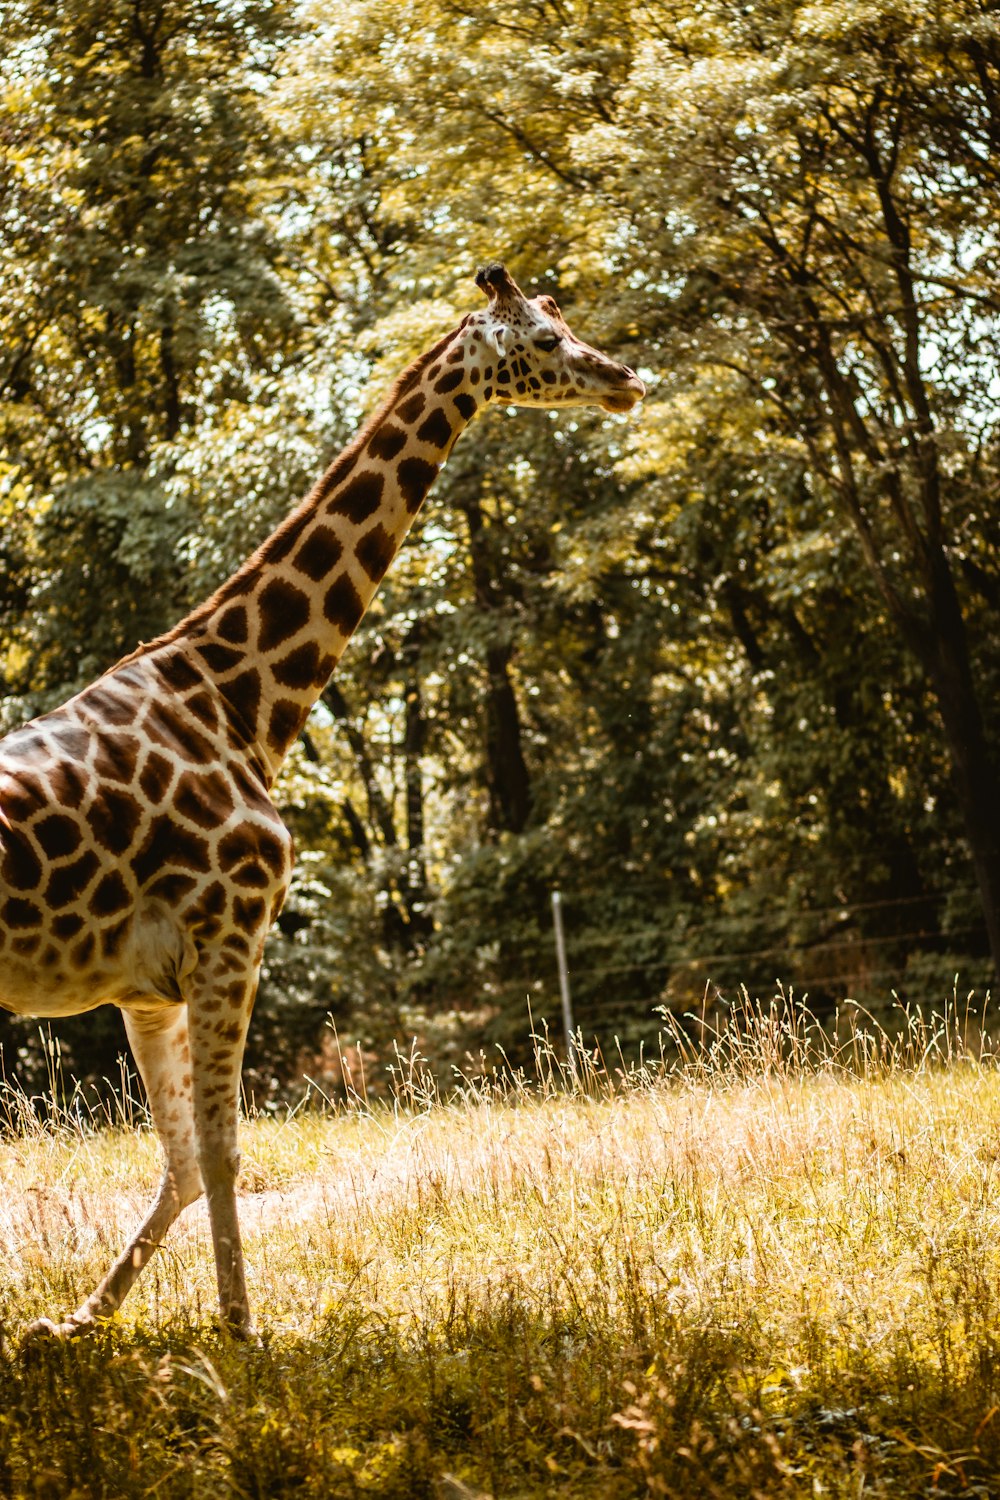 giraffe standing on brown grass field during daytime